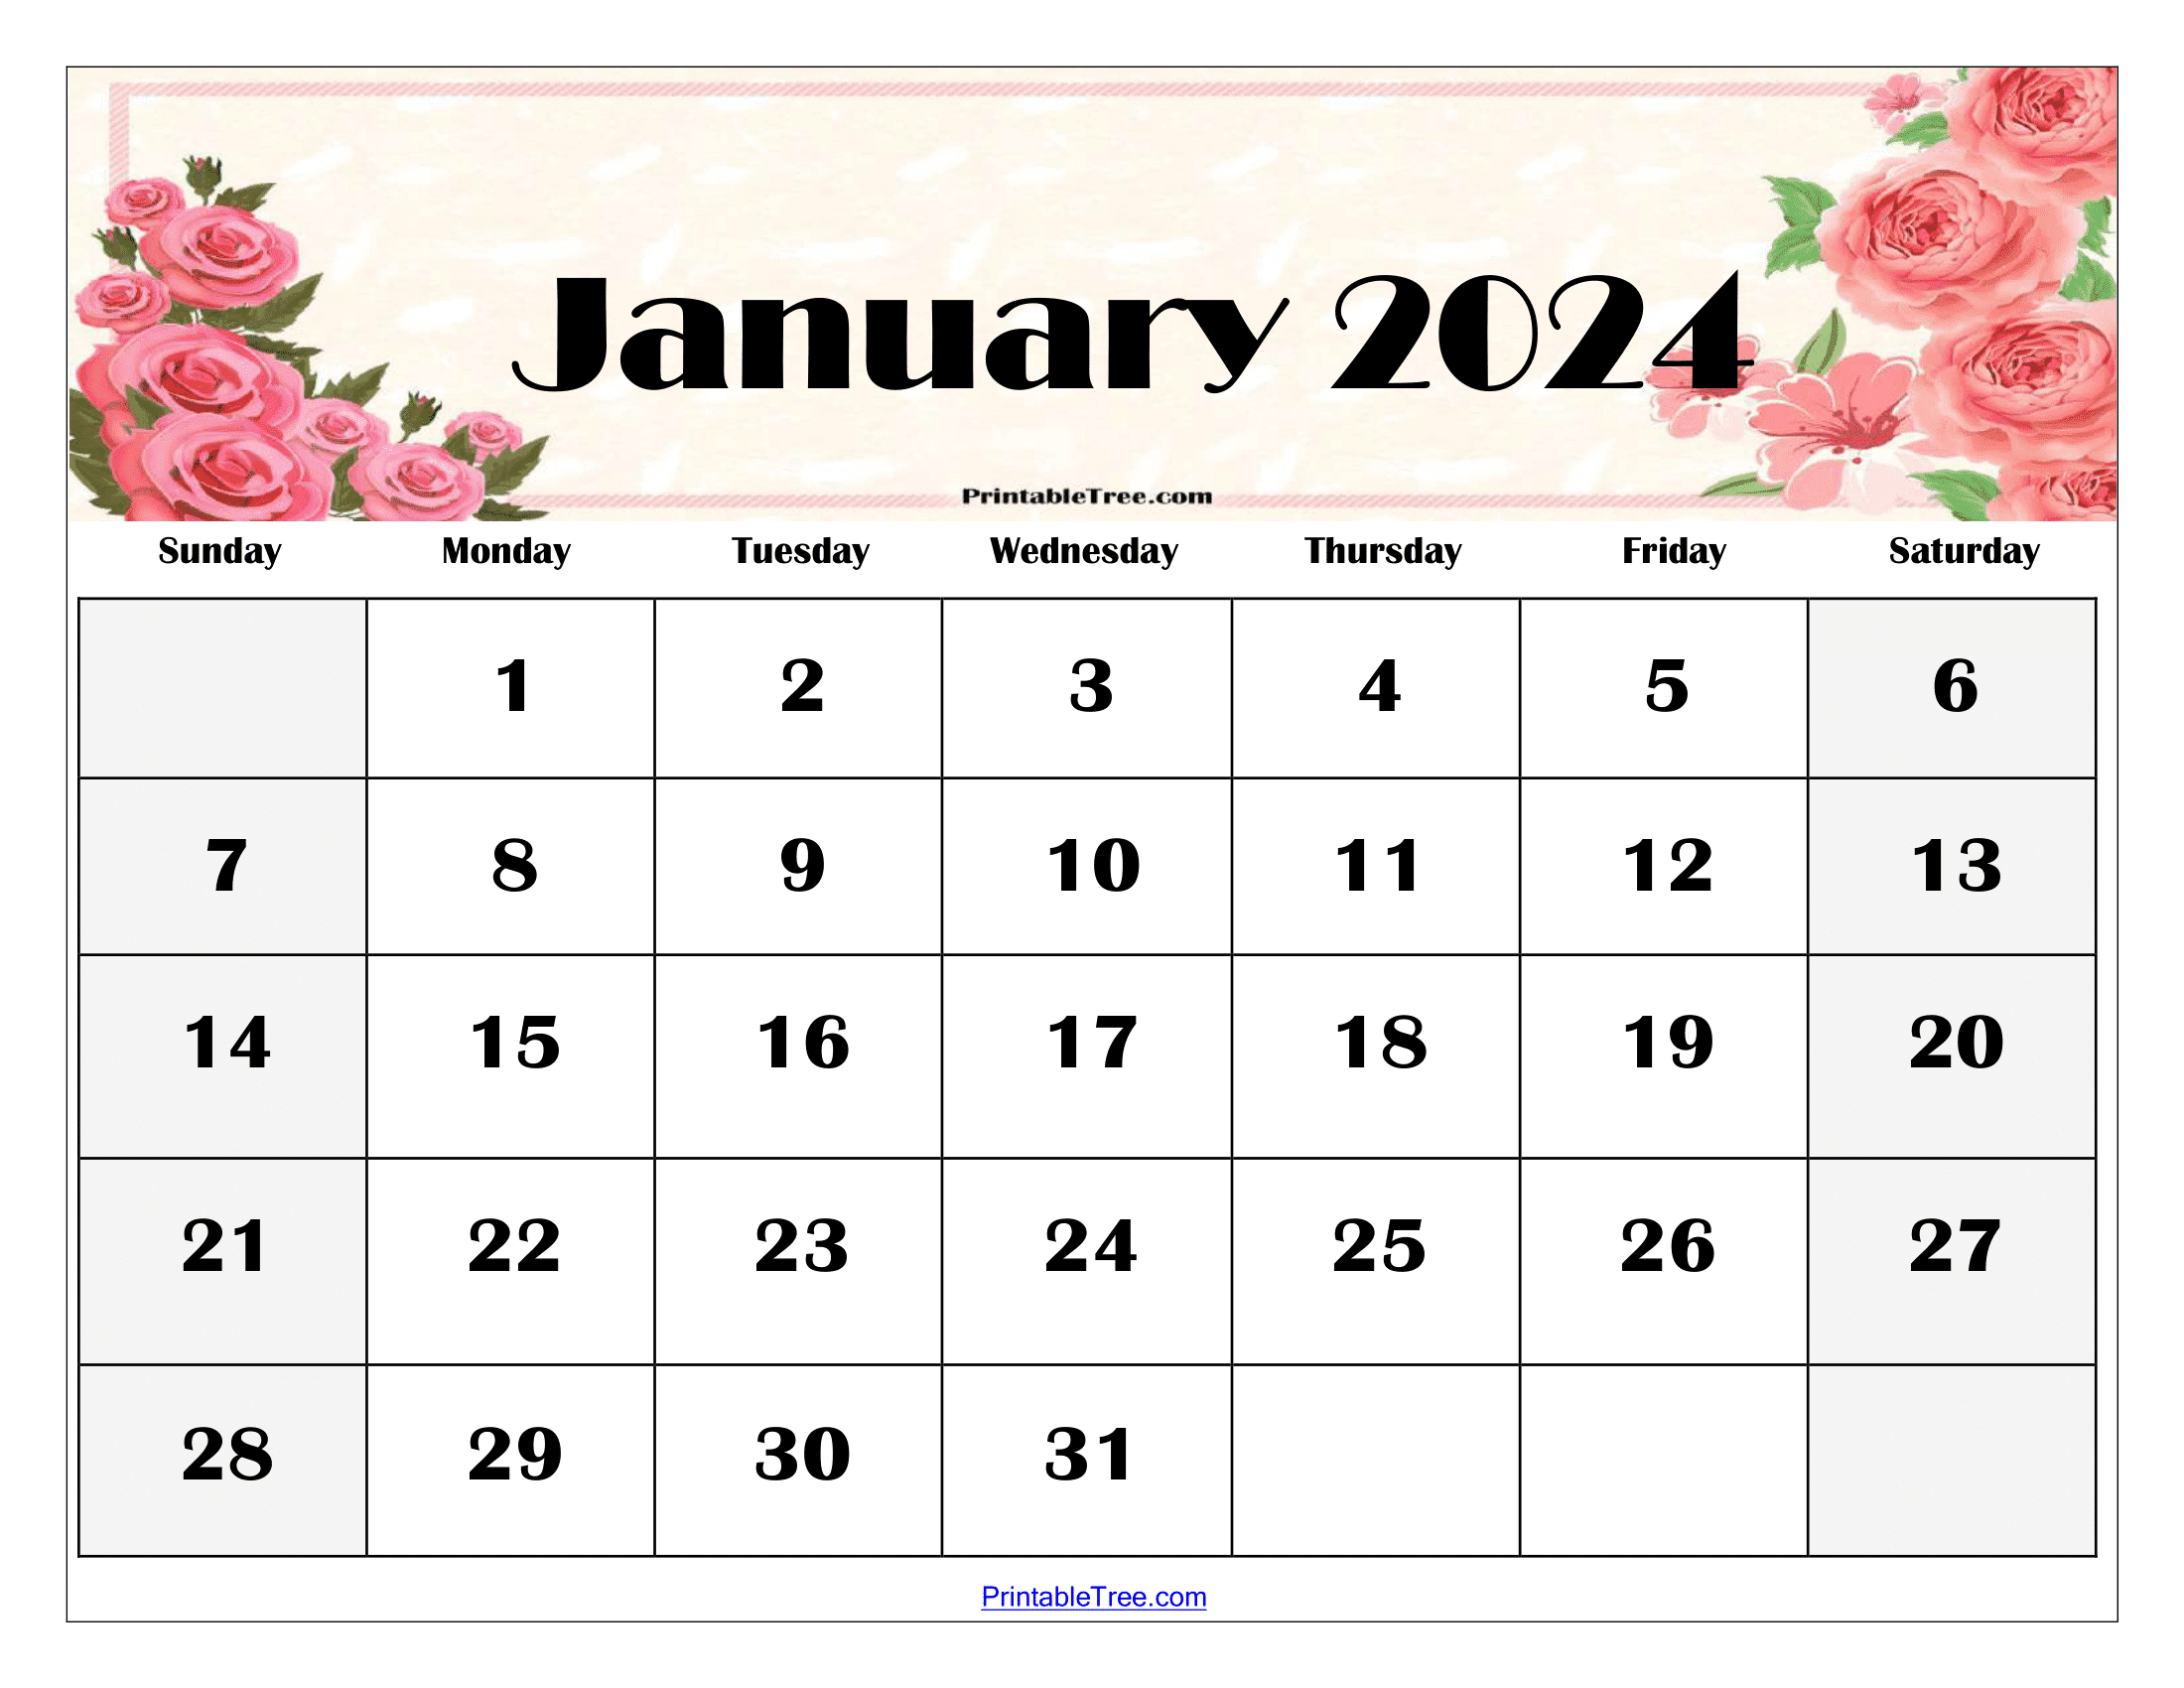 January 2024 Calendar Printable Pdf Template With Holidays for January 2024 Calendar Printable Cute